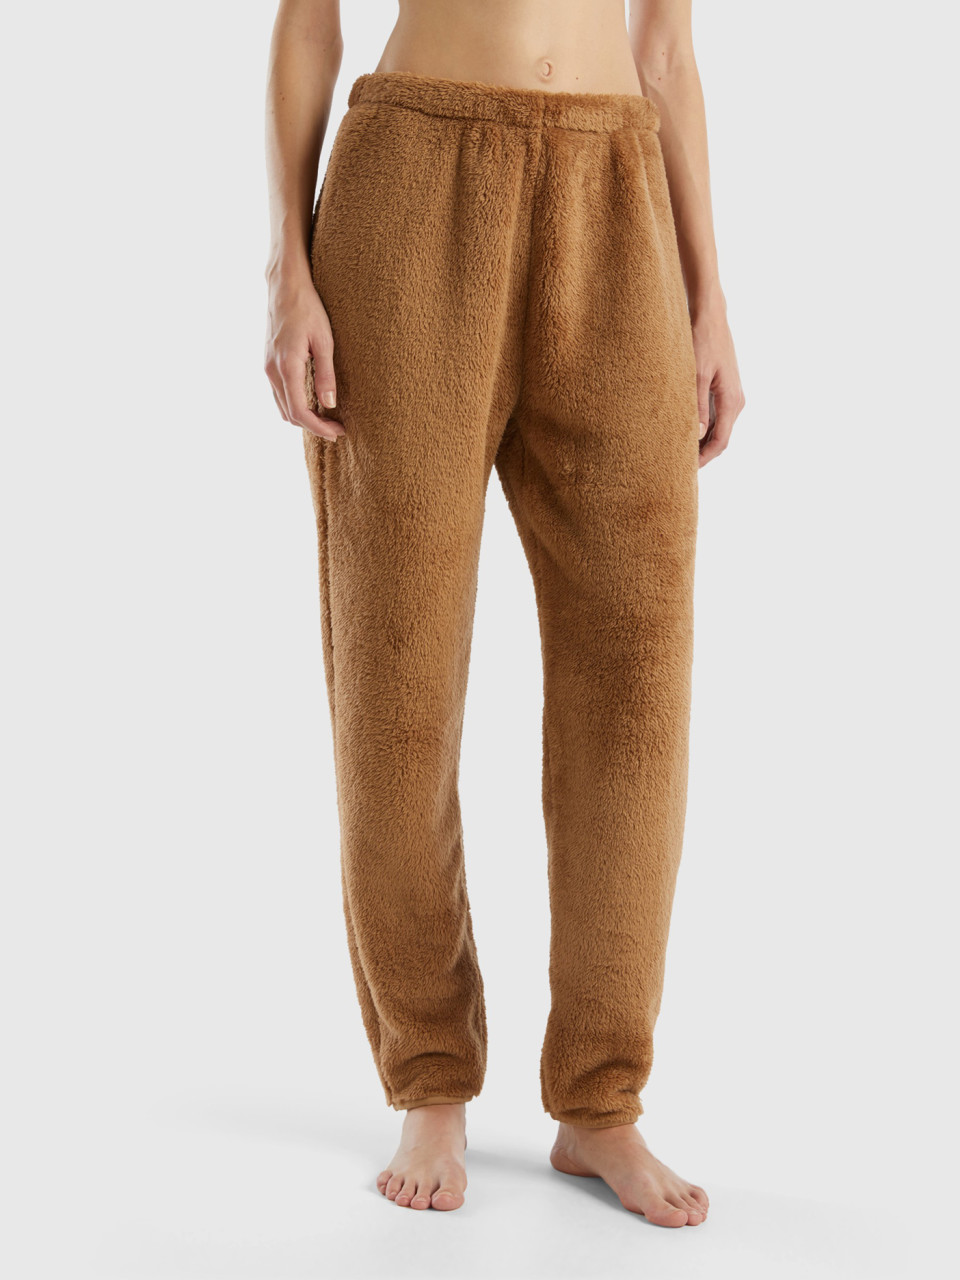 Benetton, Fur Pyjama Trousers, Camel, Women